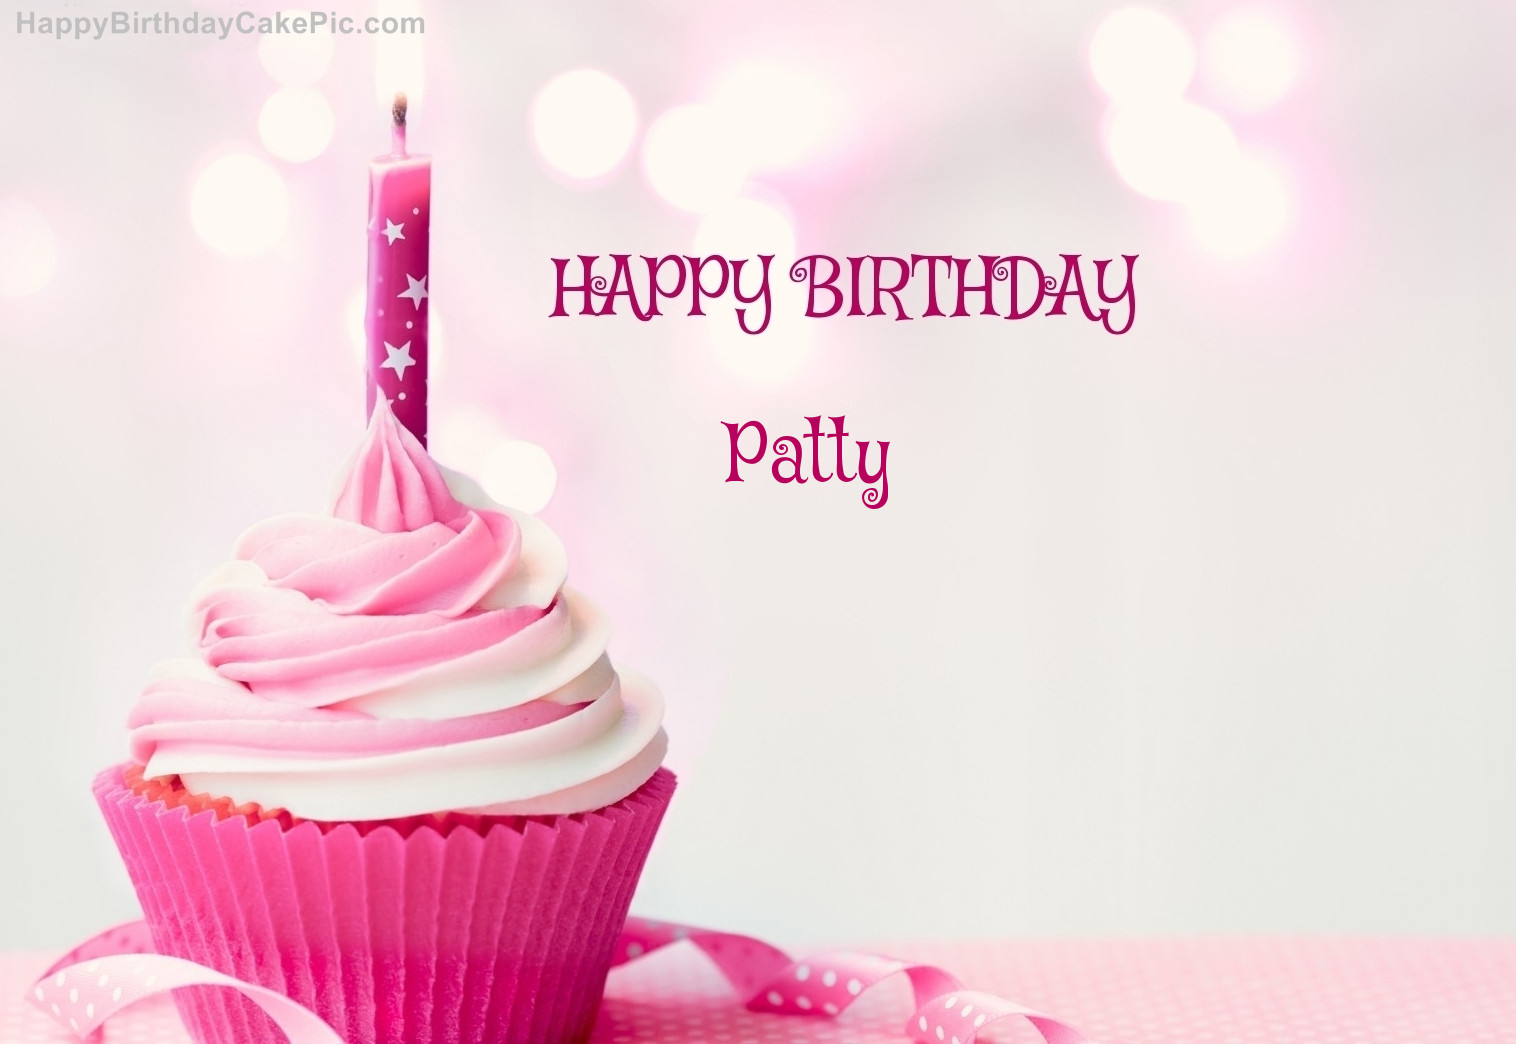 Best ideas about Happy Birthday Patty Cake
. Save or Pin Happy Birthday Cupcake Candle Pink Cake For Patty Now.